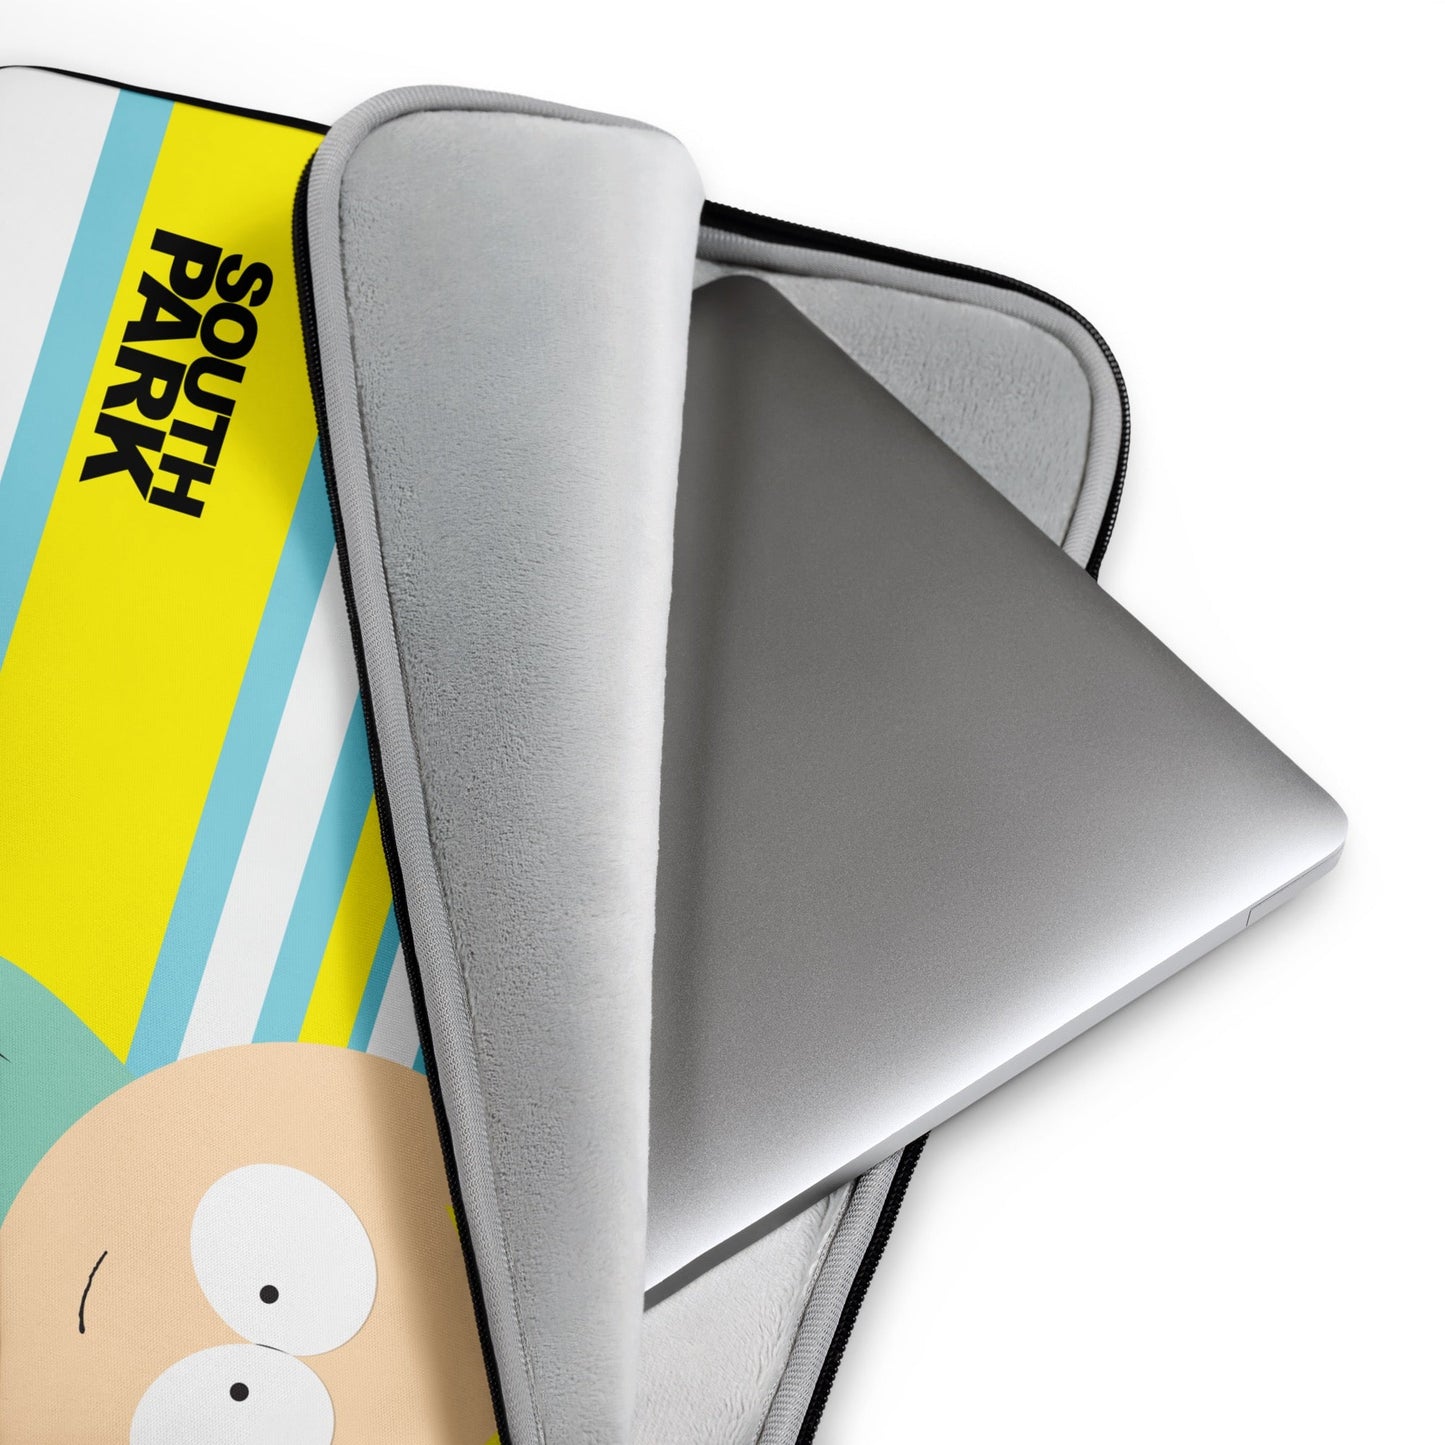 South Park Butters Laptop Sleeve - Paramount Shop